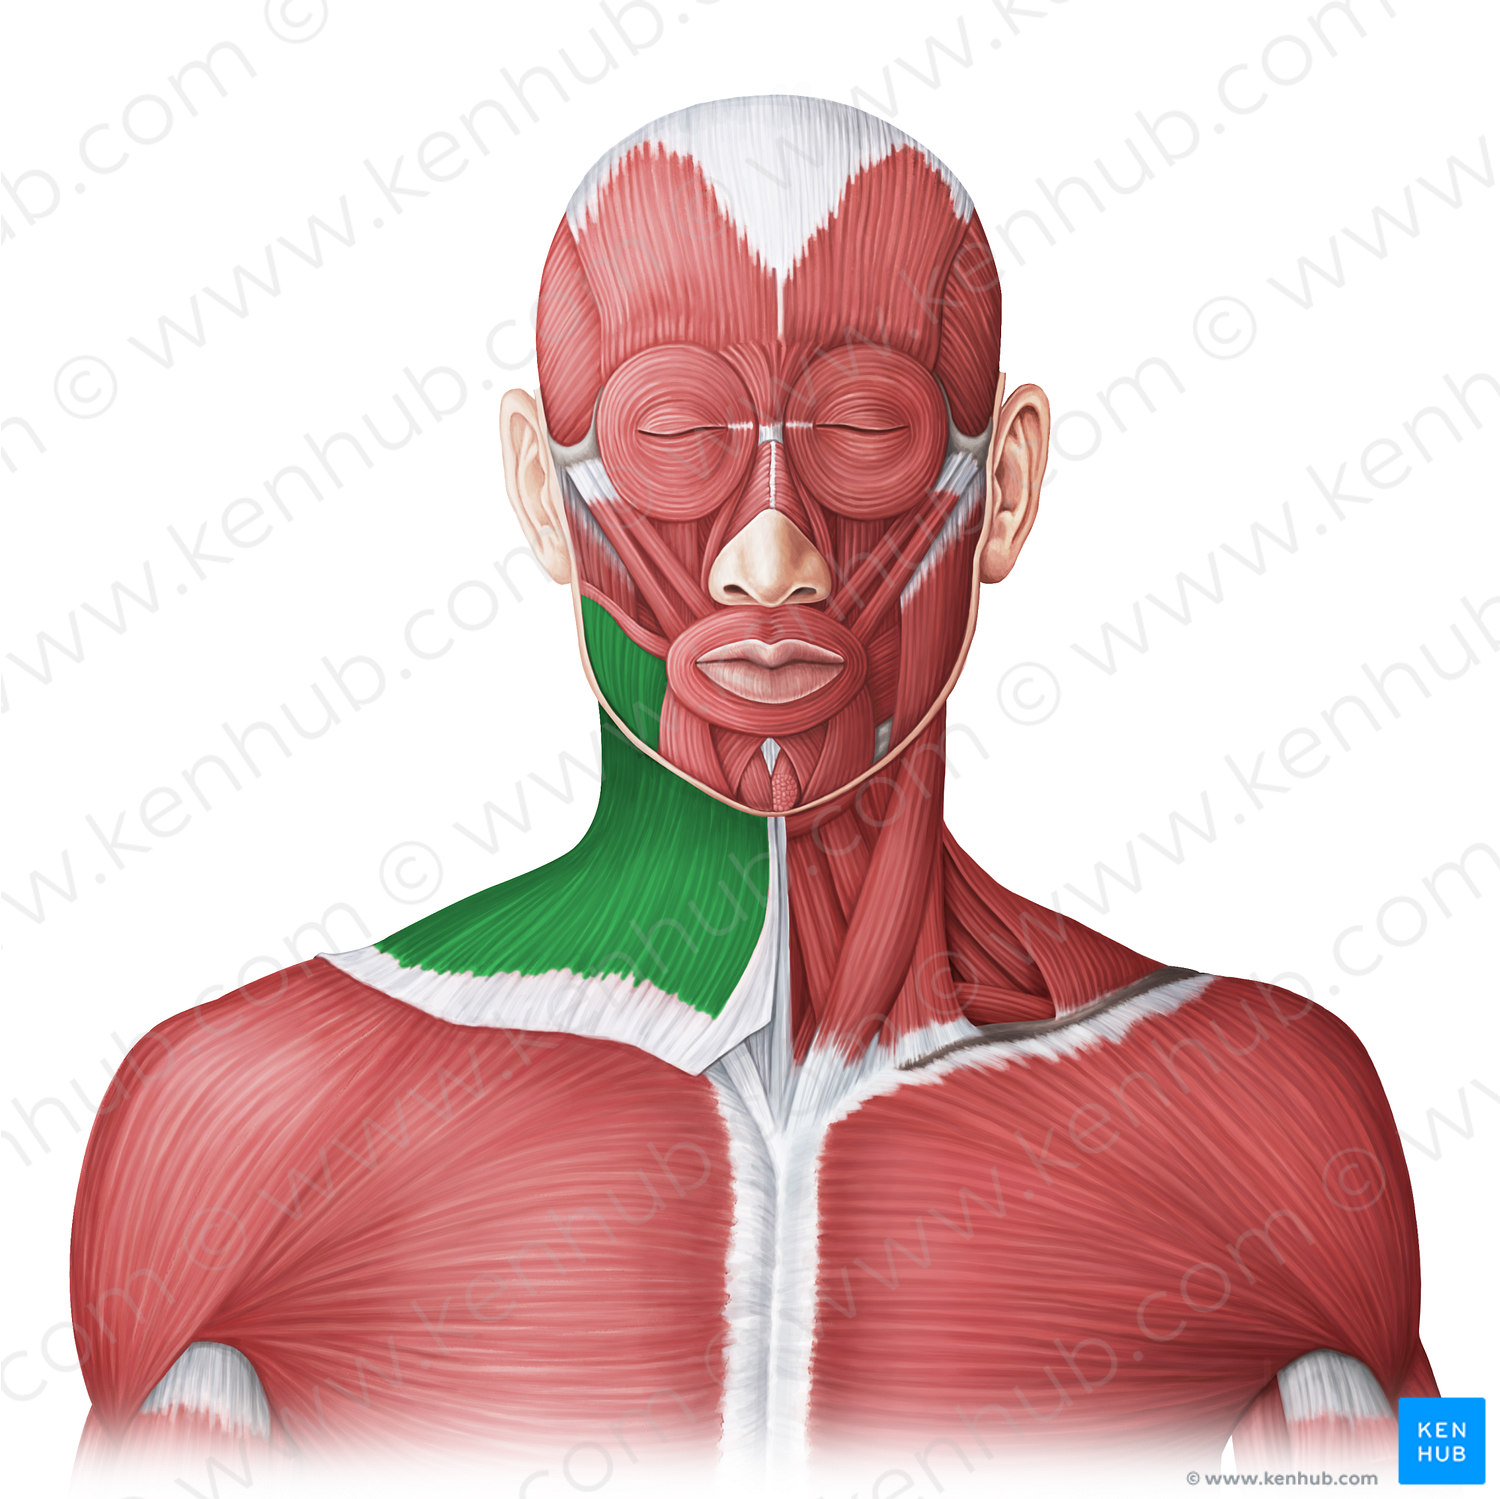 Platysma muscle (#20021)